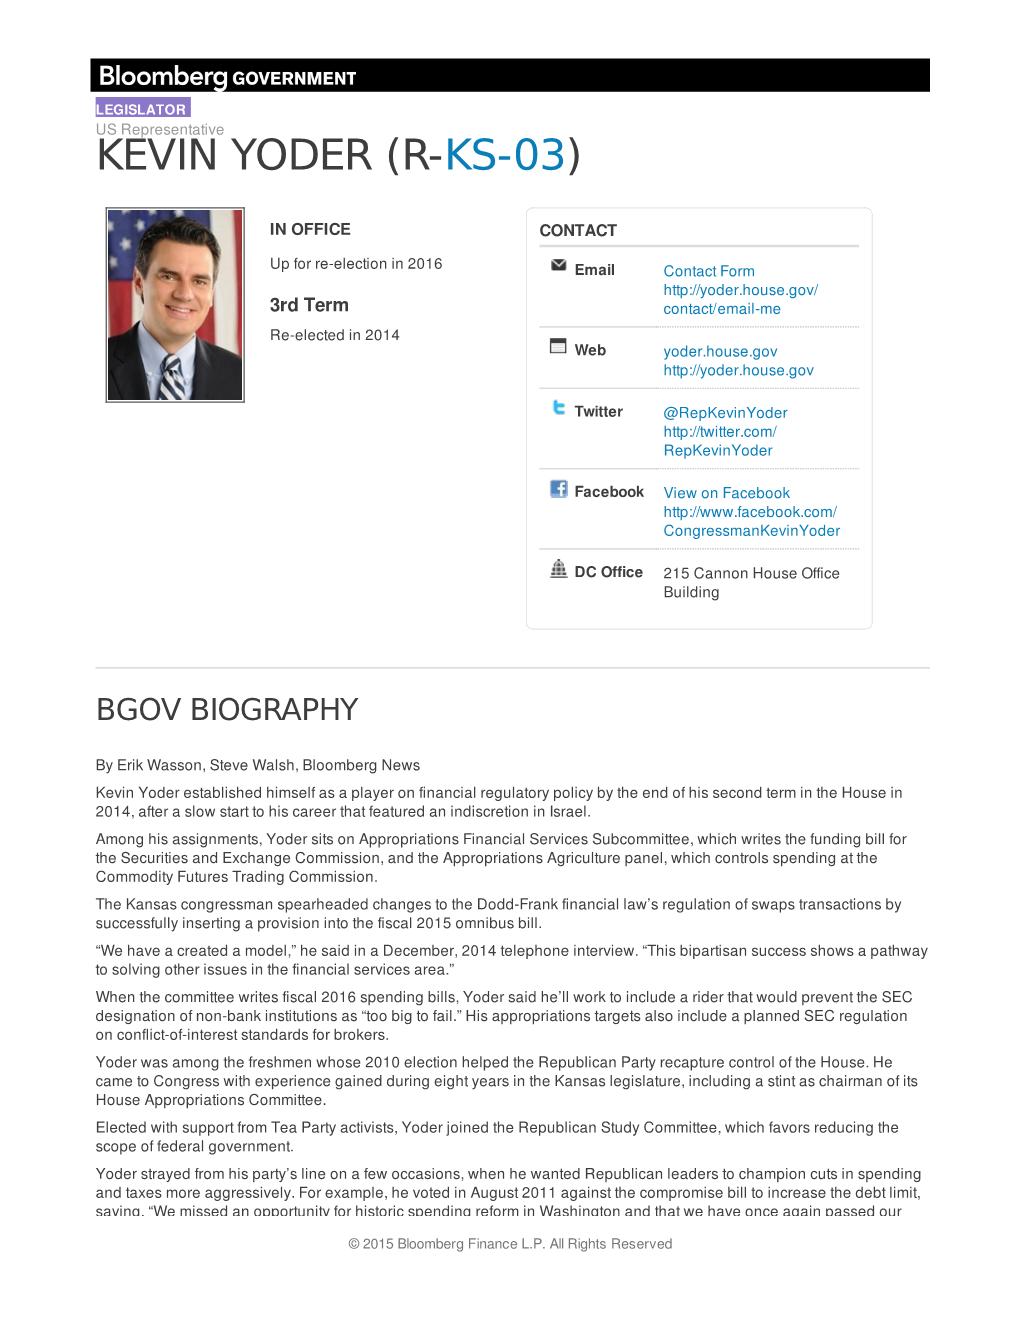 Kevin Yoder (R-Ks-03)